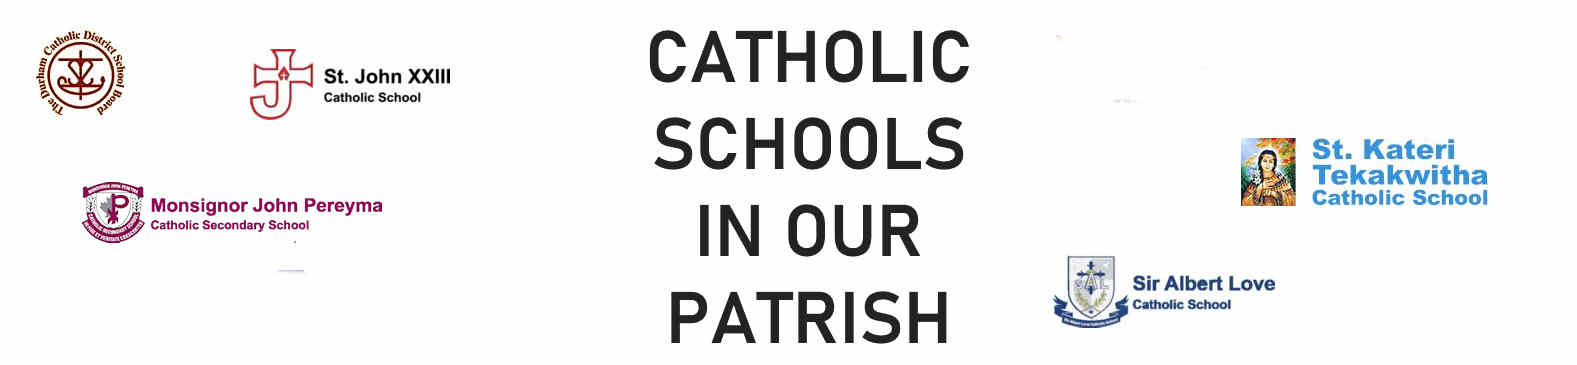 Catholic Schools Banner